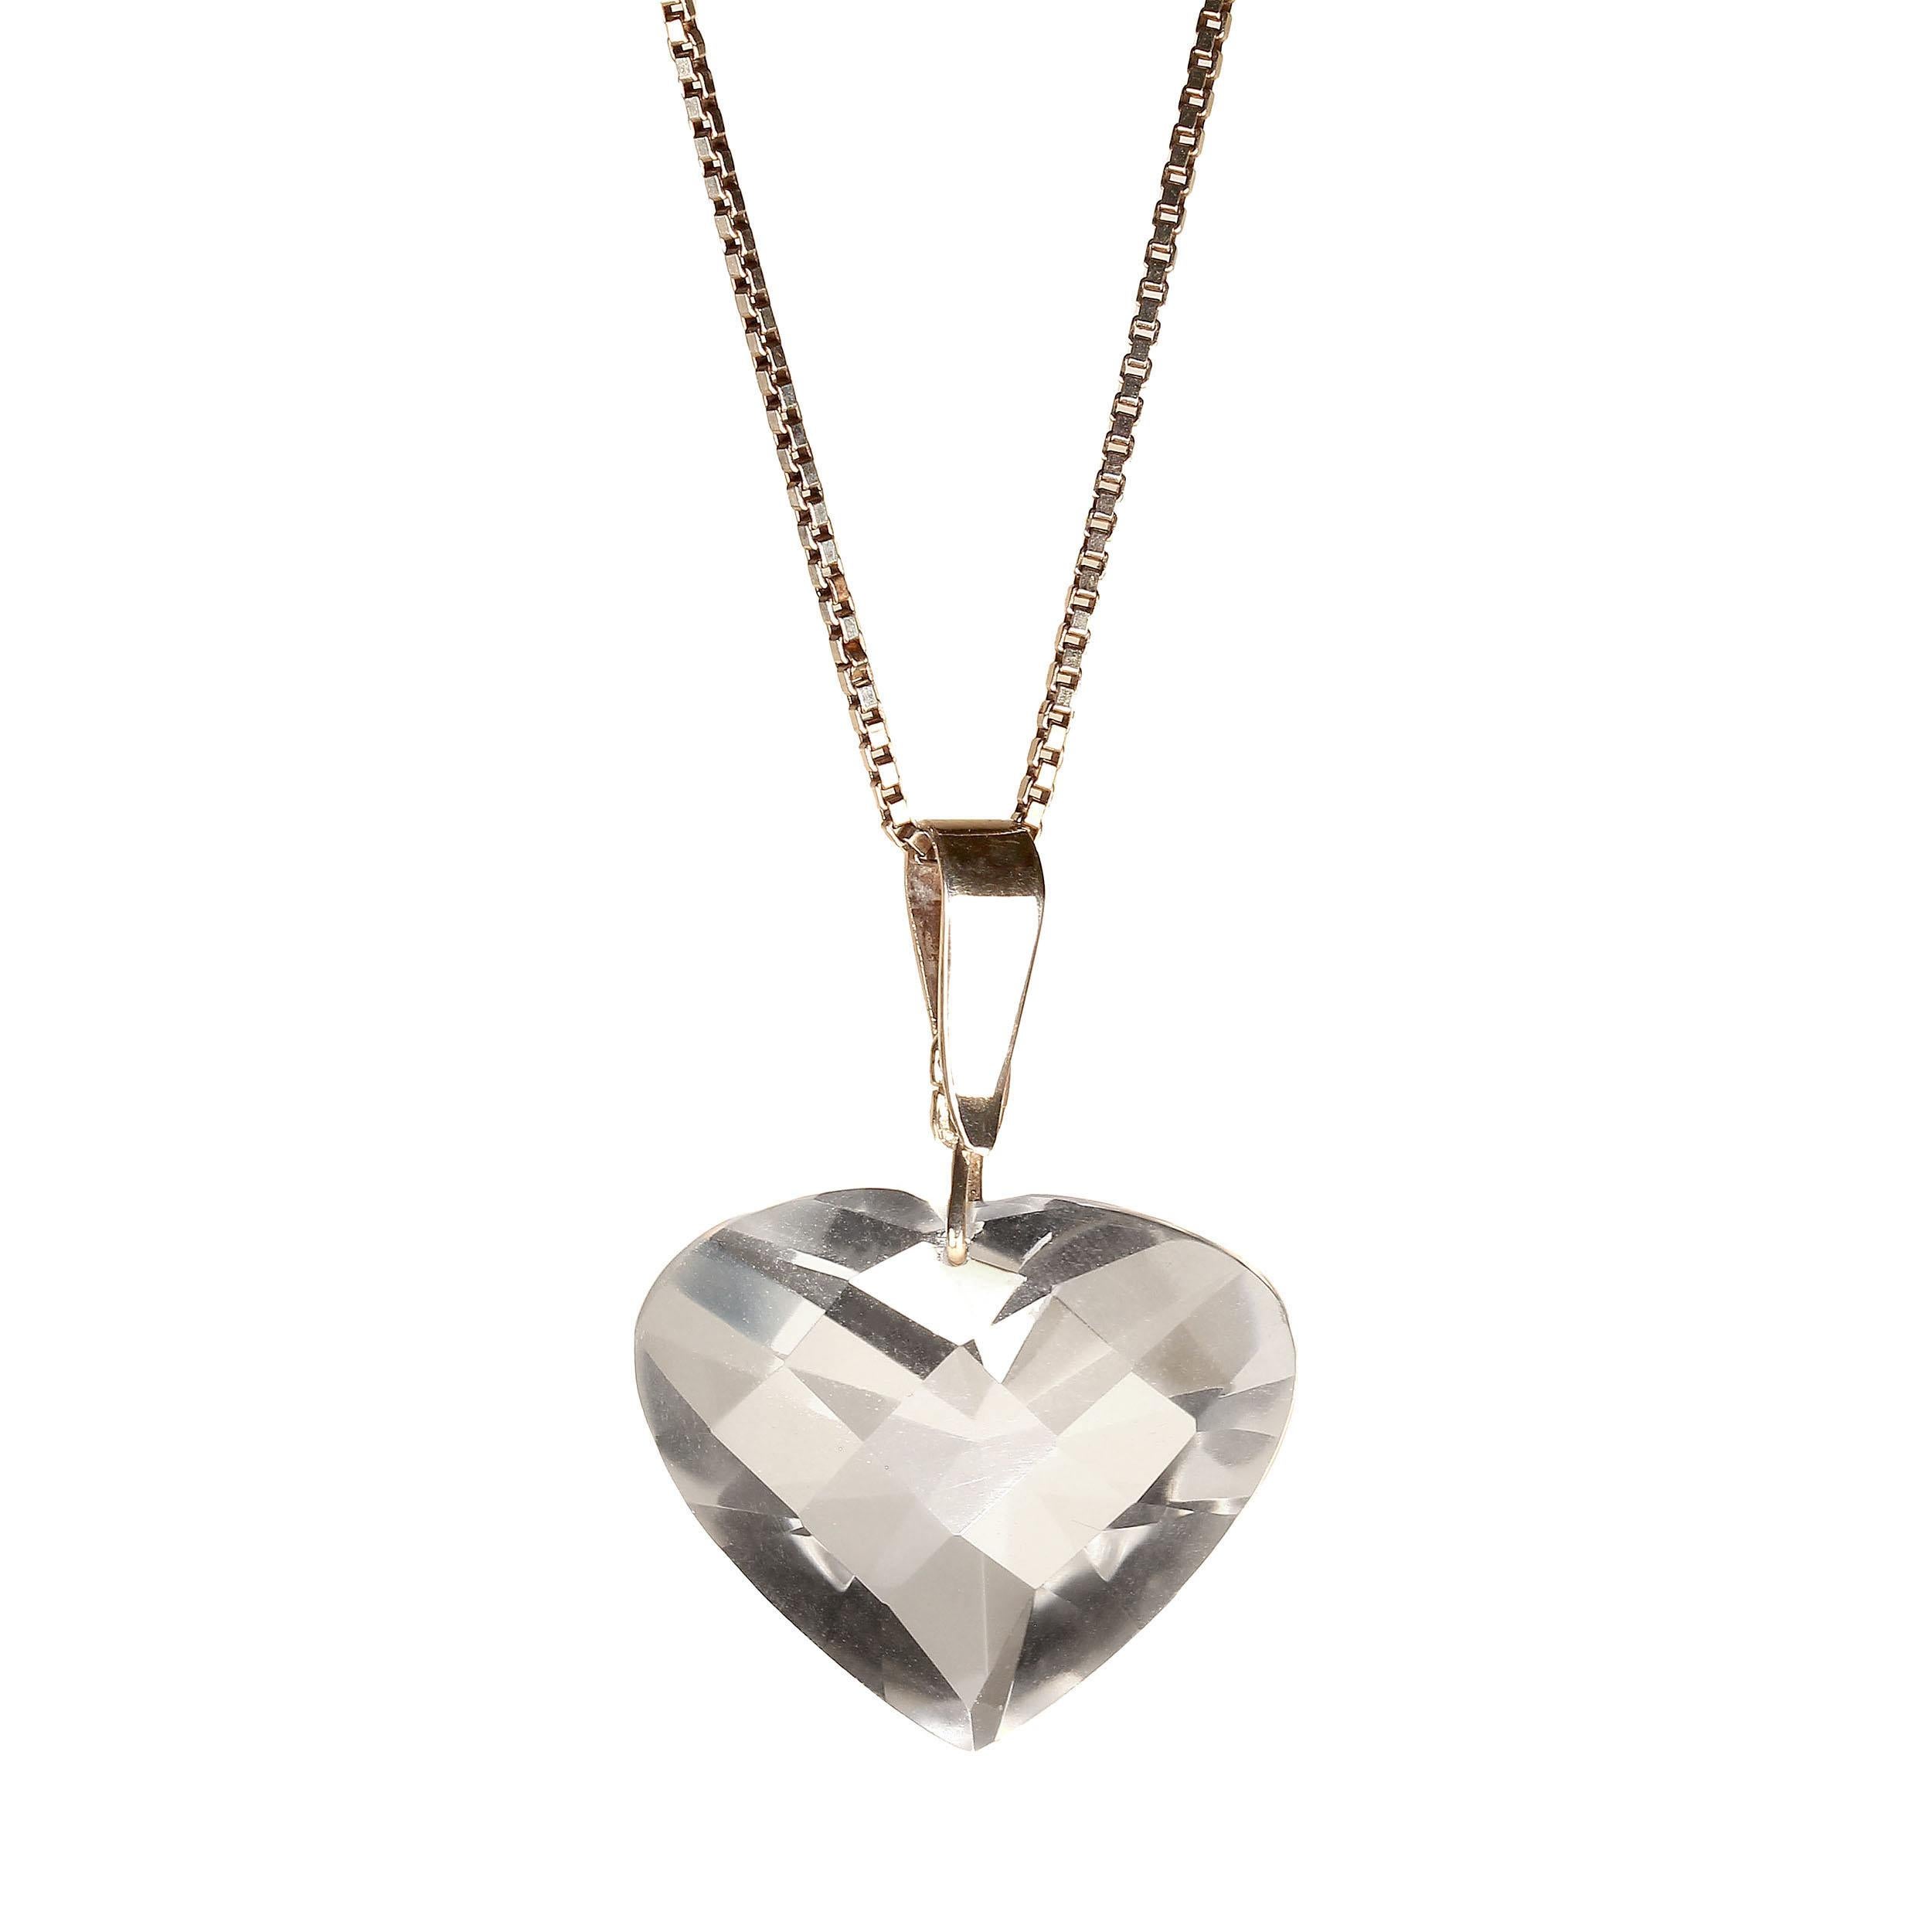 Artisan AJD 66 Carat Faceted Brazilian Quartz Crystal Heart   Great Gift!